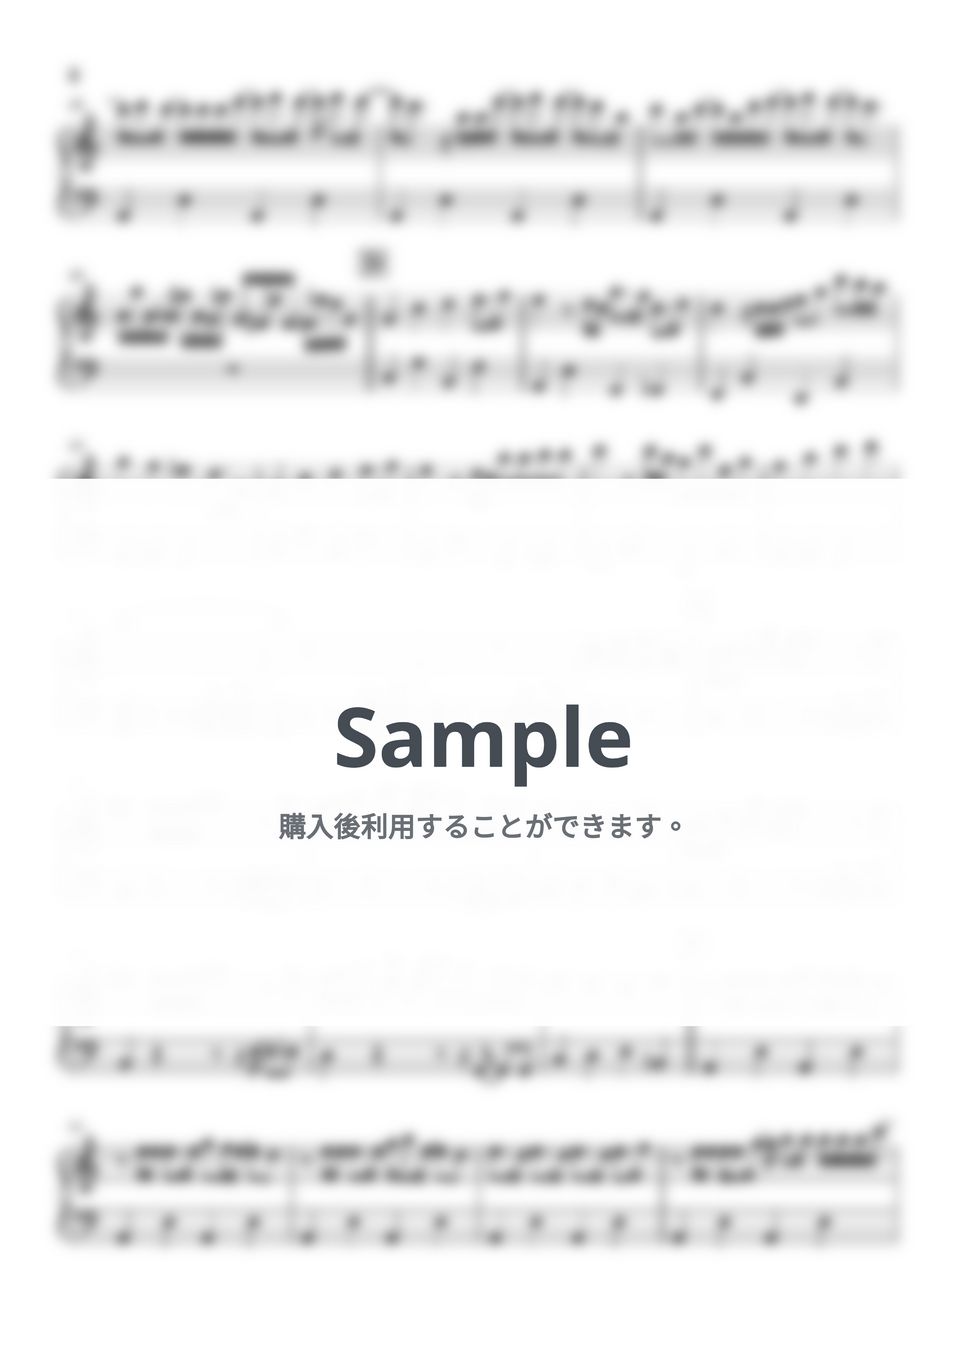 King Gnu - BOY (王様ランキング / ピアノ楽譜 / 初級) by Piano Lovers. jp